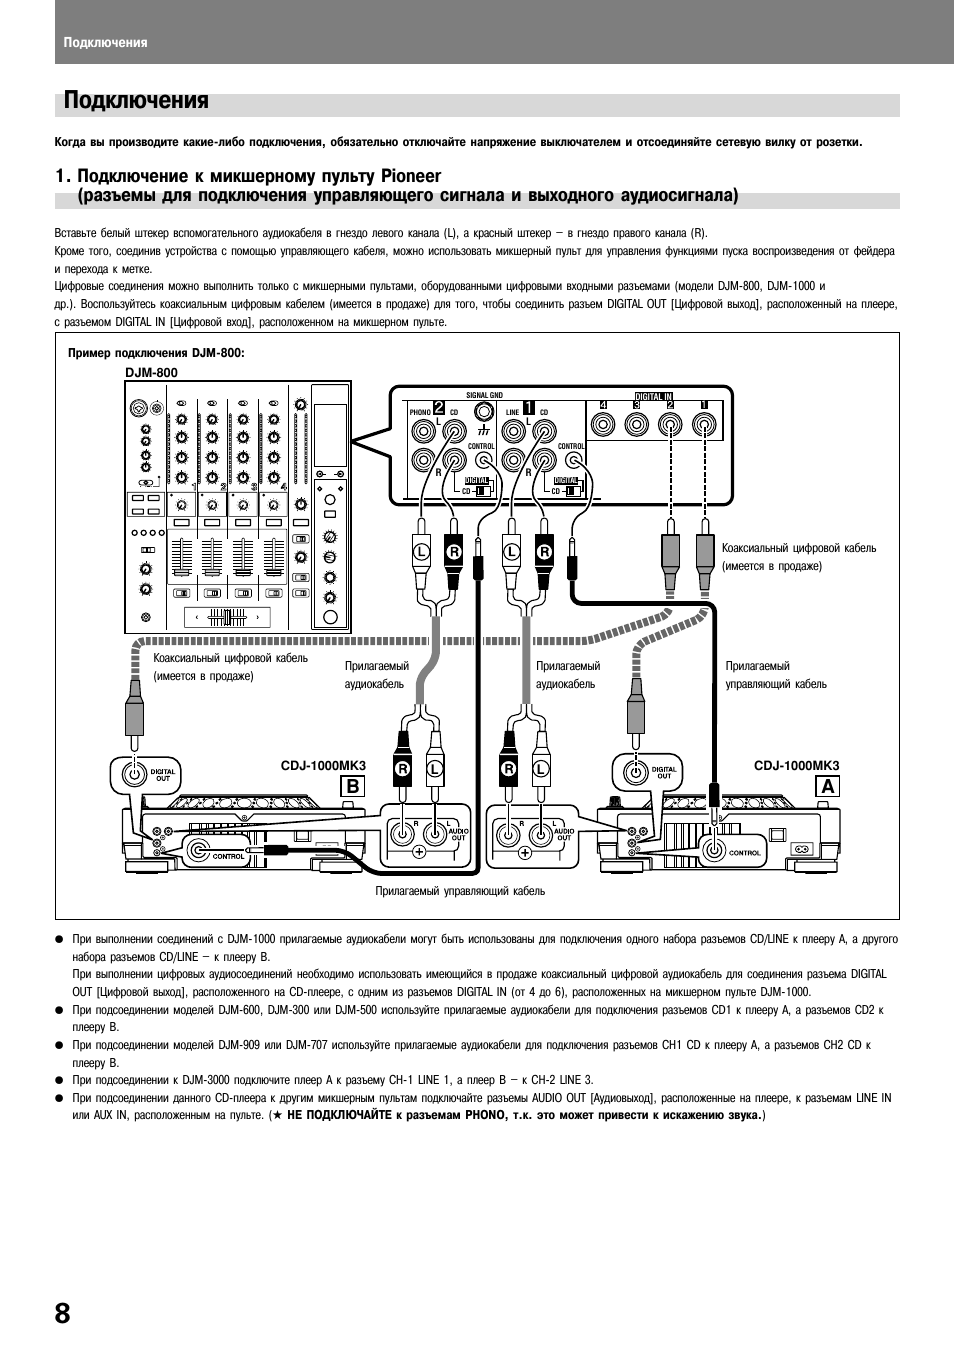 Подключения | Инструкция по эксплуатации Pioneer CDJ-1000 MK3 | Страница 8 / 24